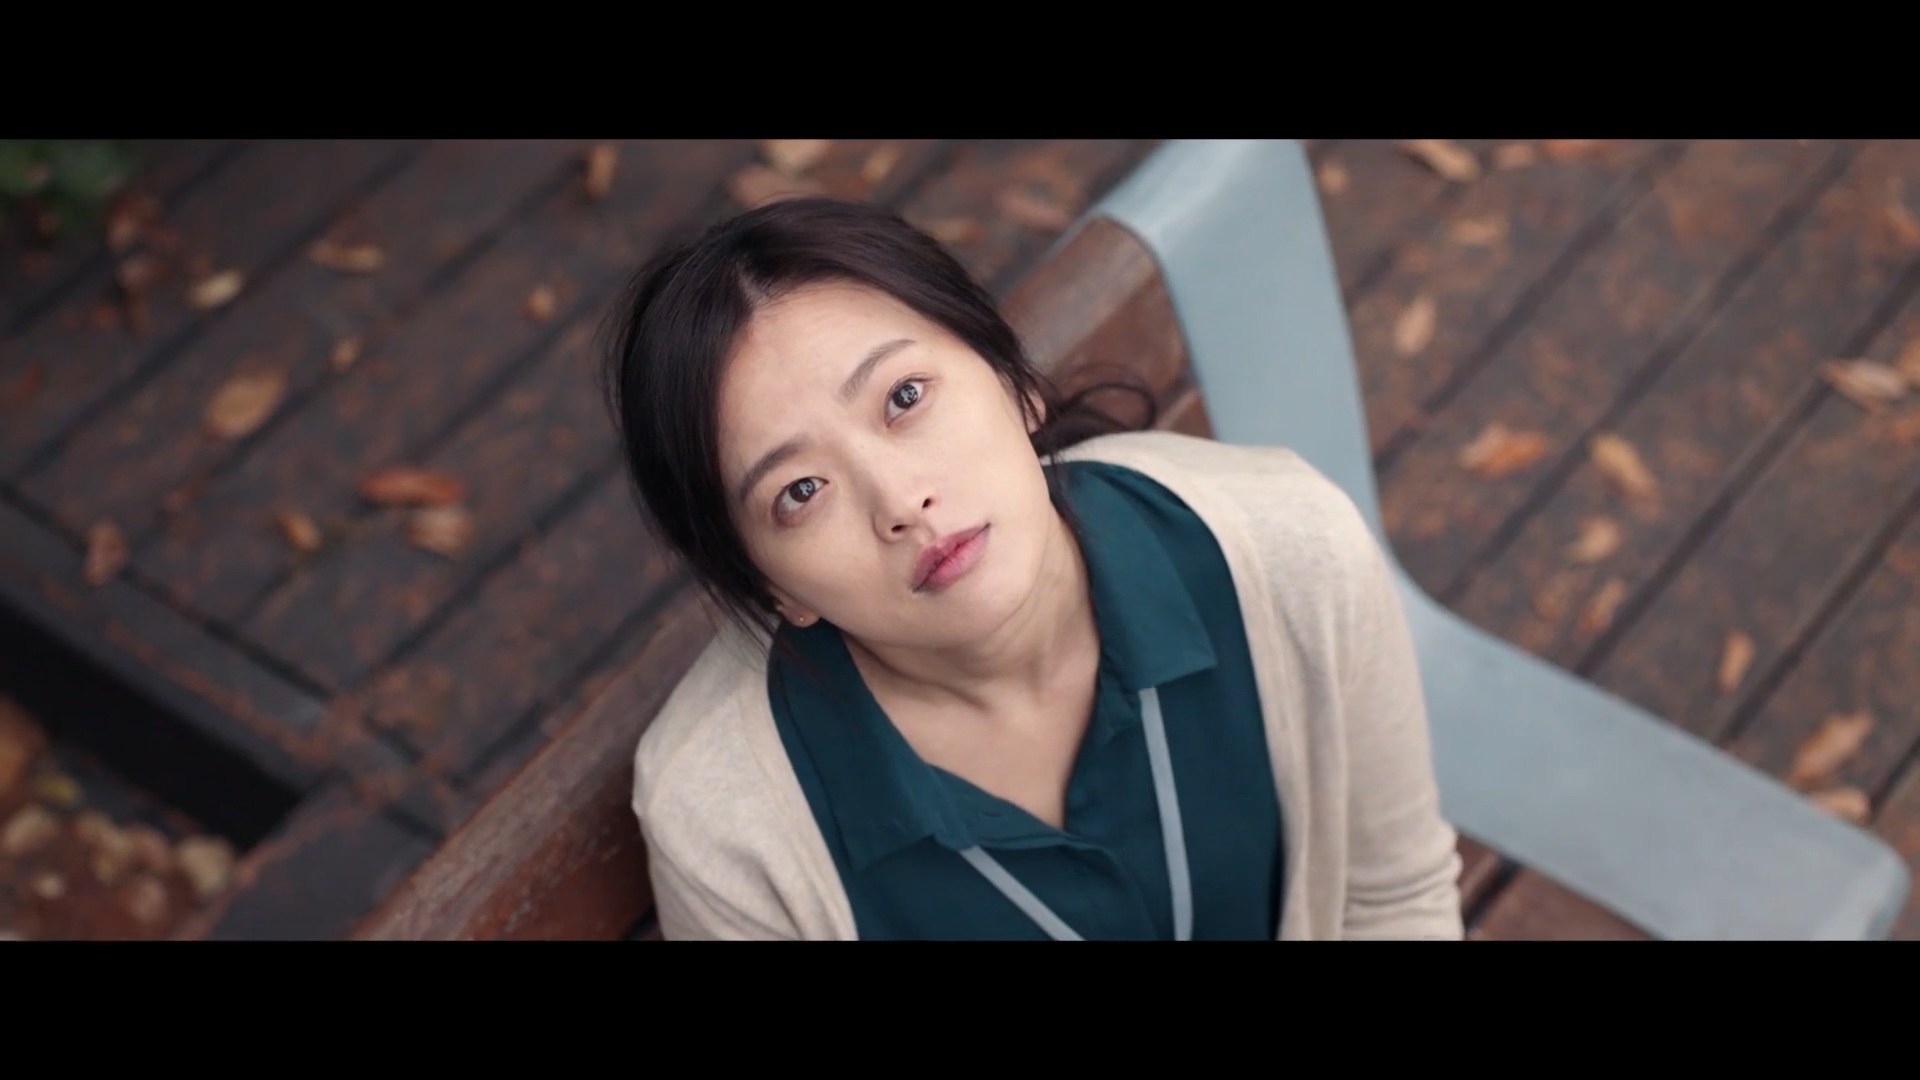 Kdramalive image of Chun Woo-hee in "Vertigo" (2019)